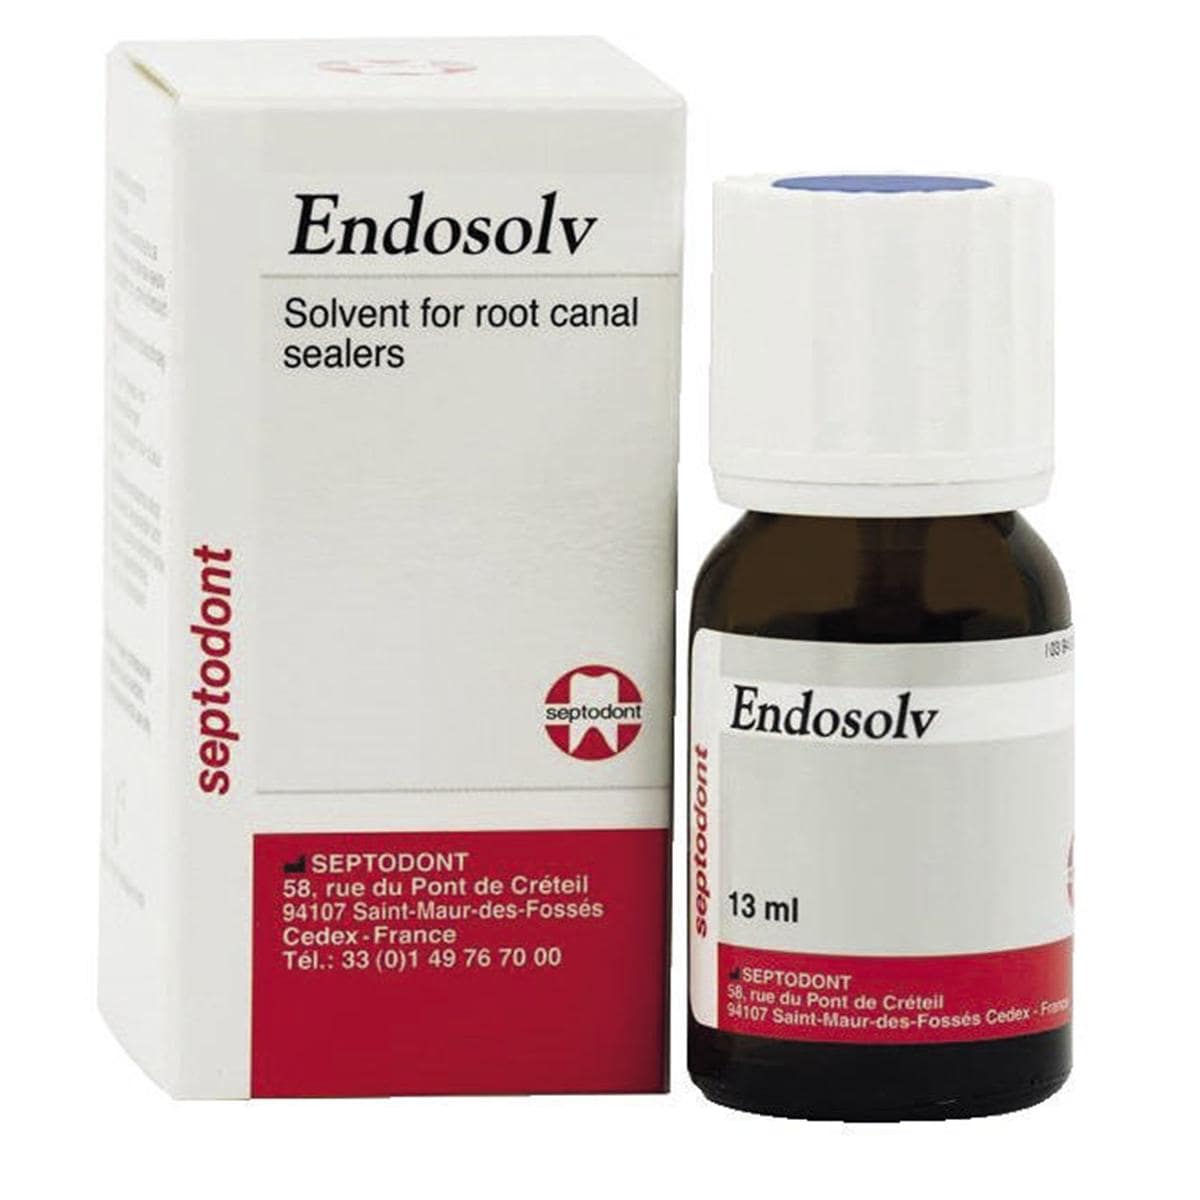 ENDOSOLV - Flacone da 13 ml